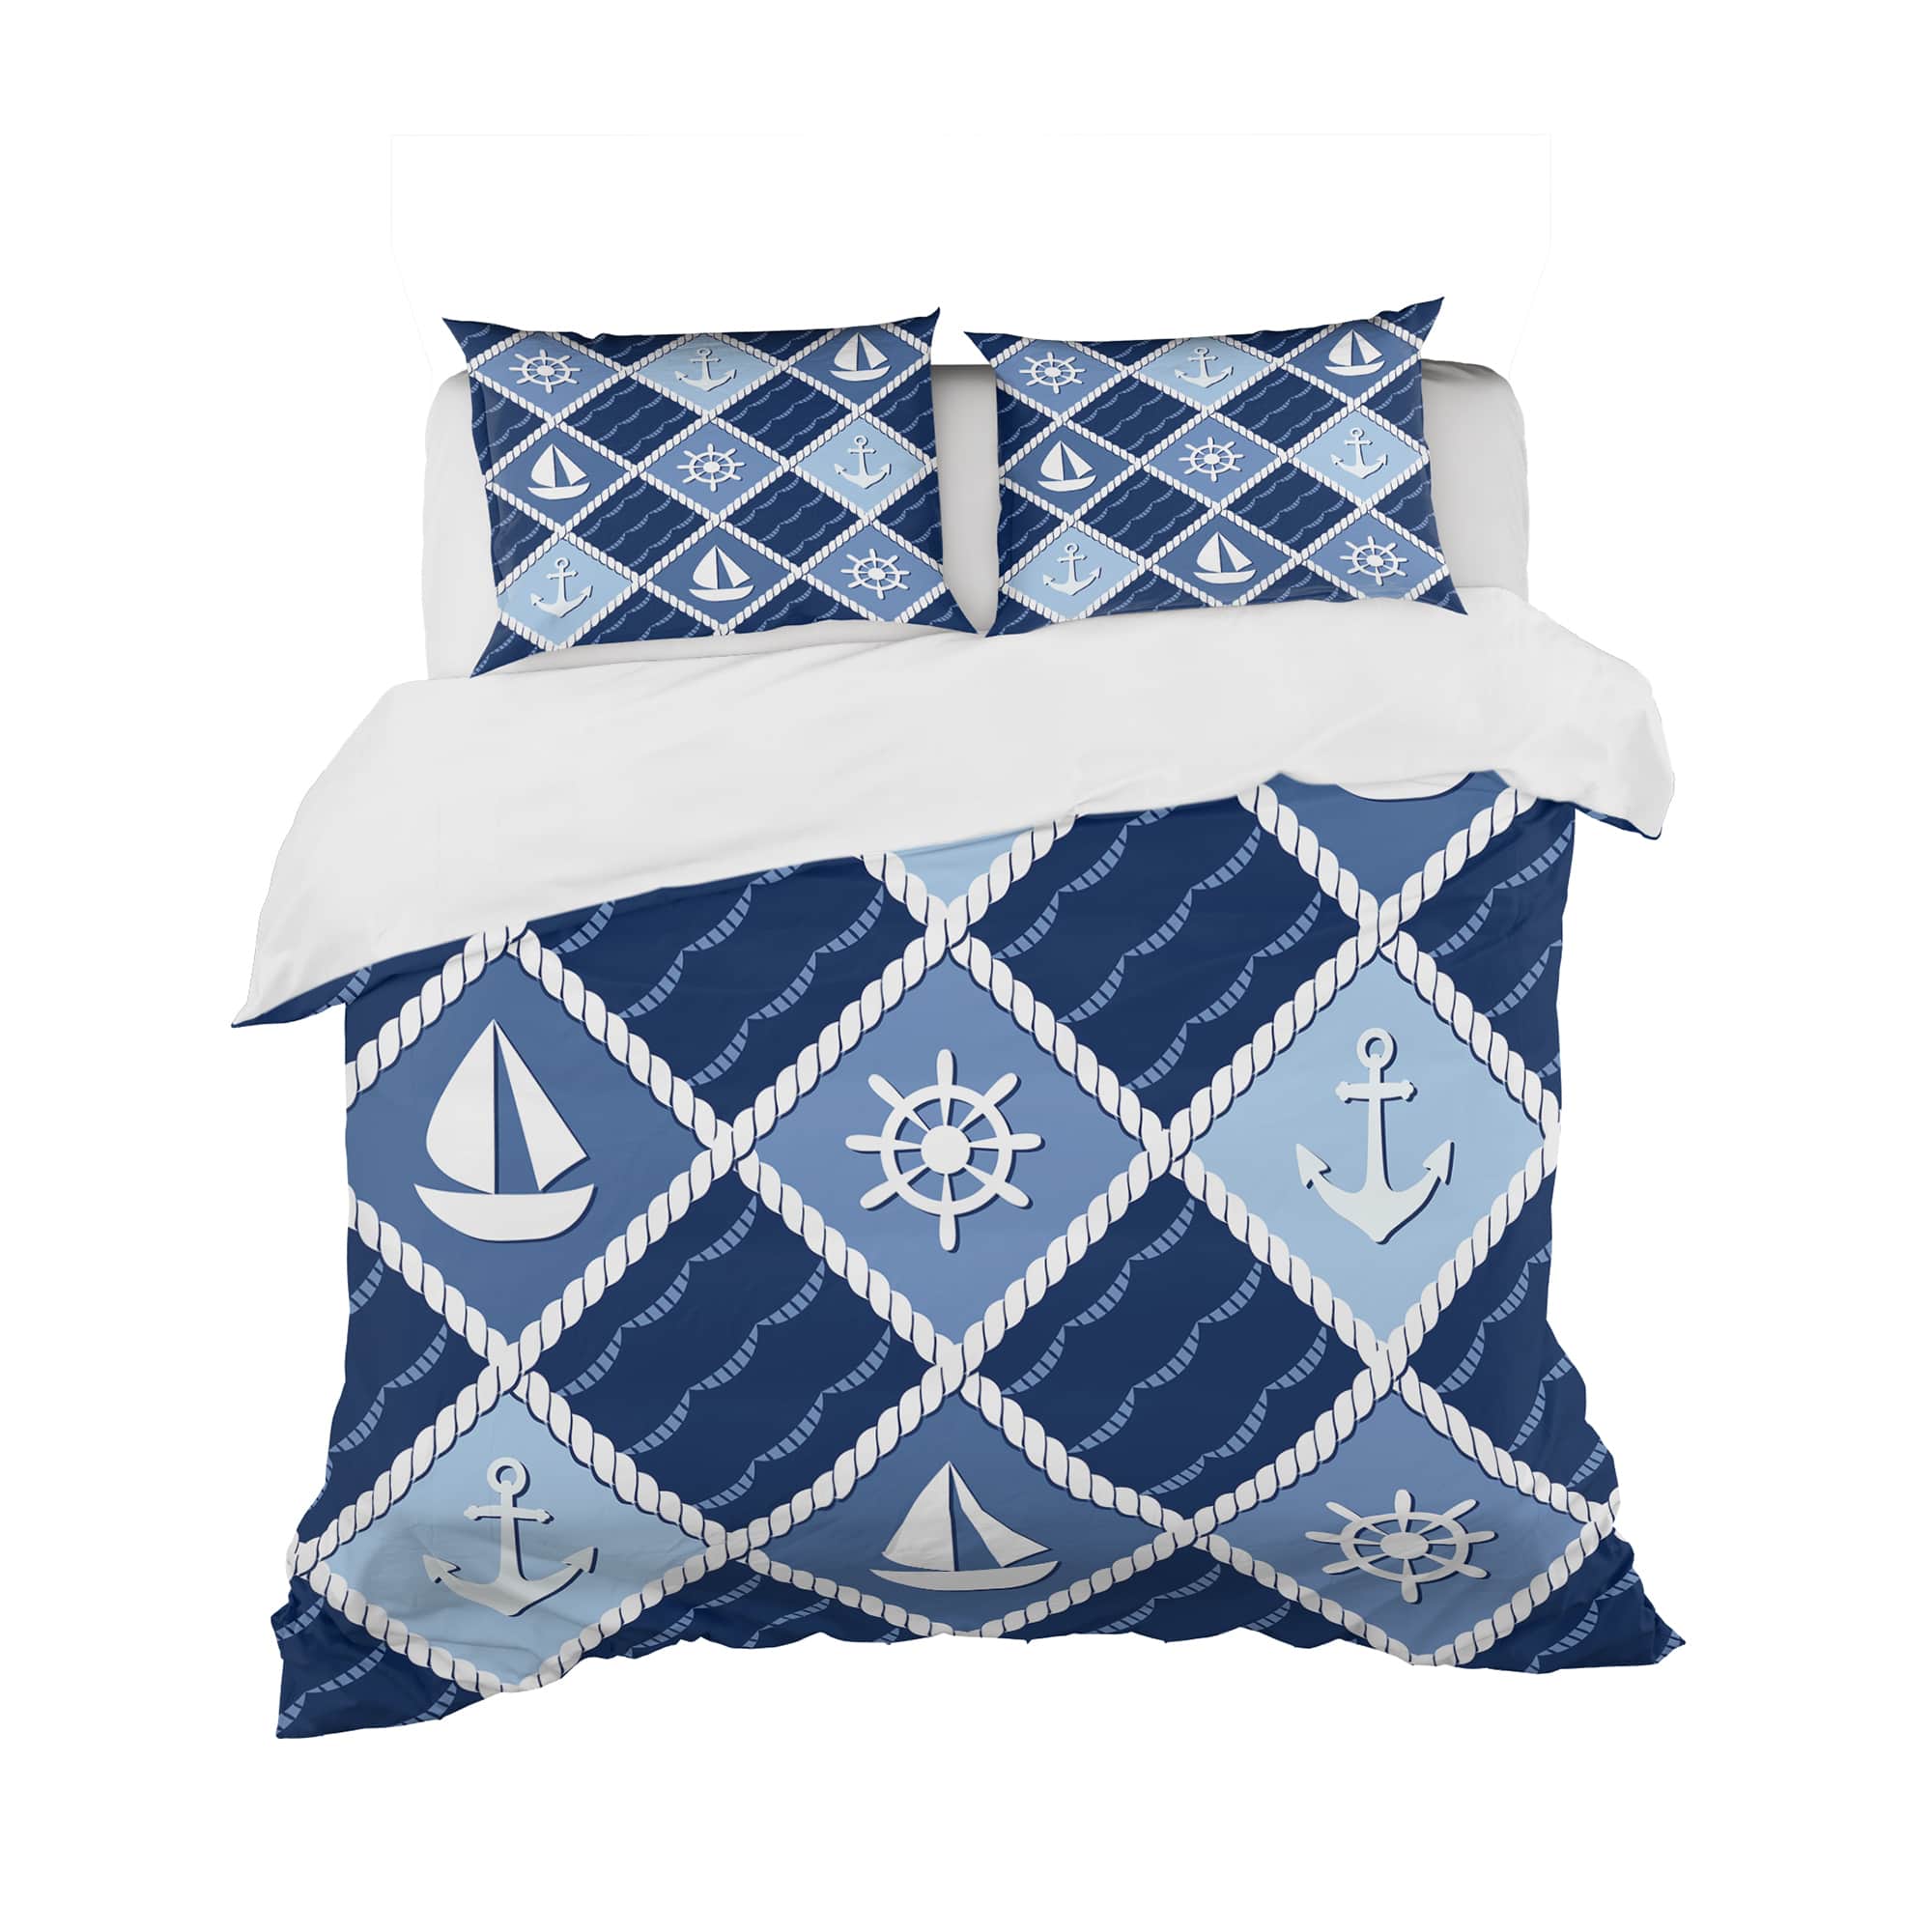 Designart &#x27;Anchor and sailboat on blue waves&#x27; Coastal Bedding Set - Duvet Cover &#x26; Shams